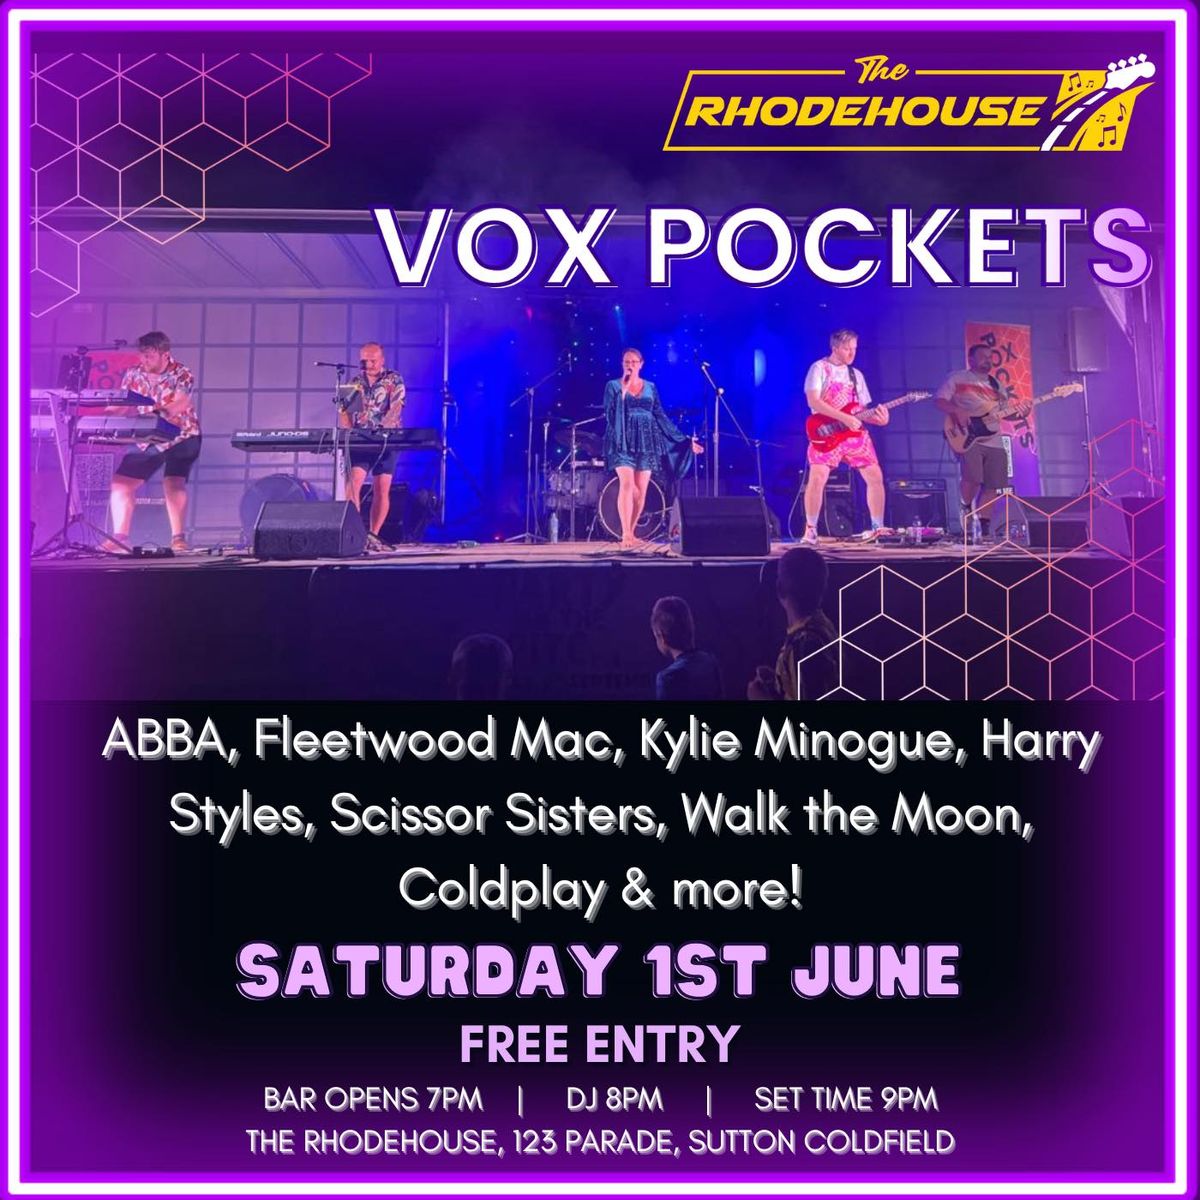 Vox Pockets: FREE ENTRY EVENT